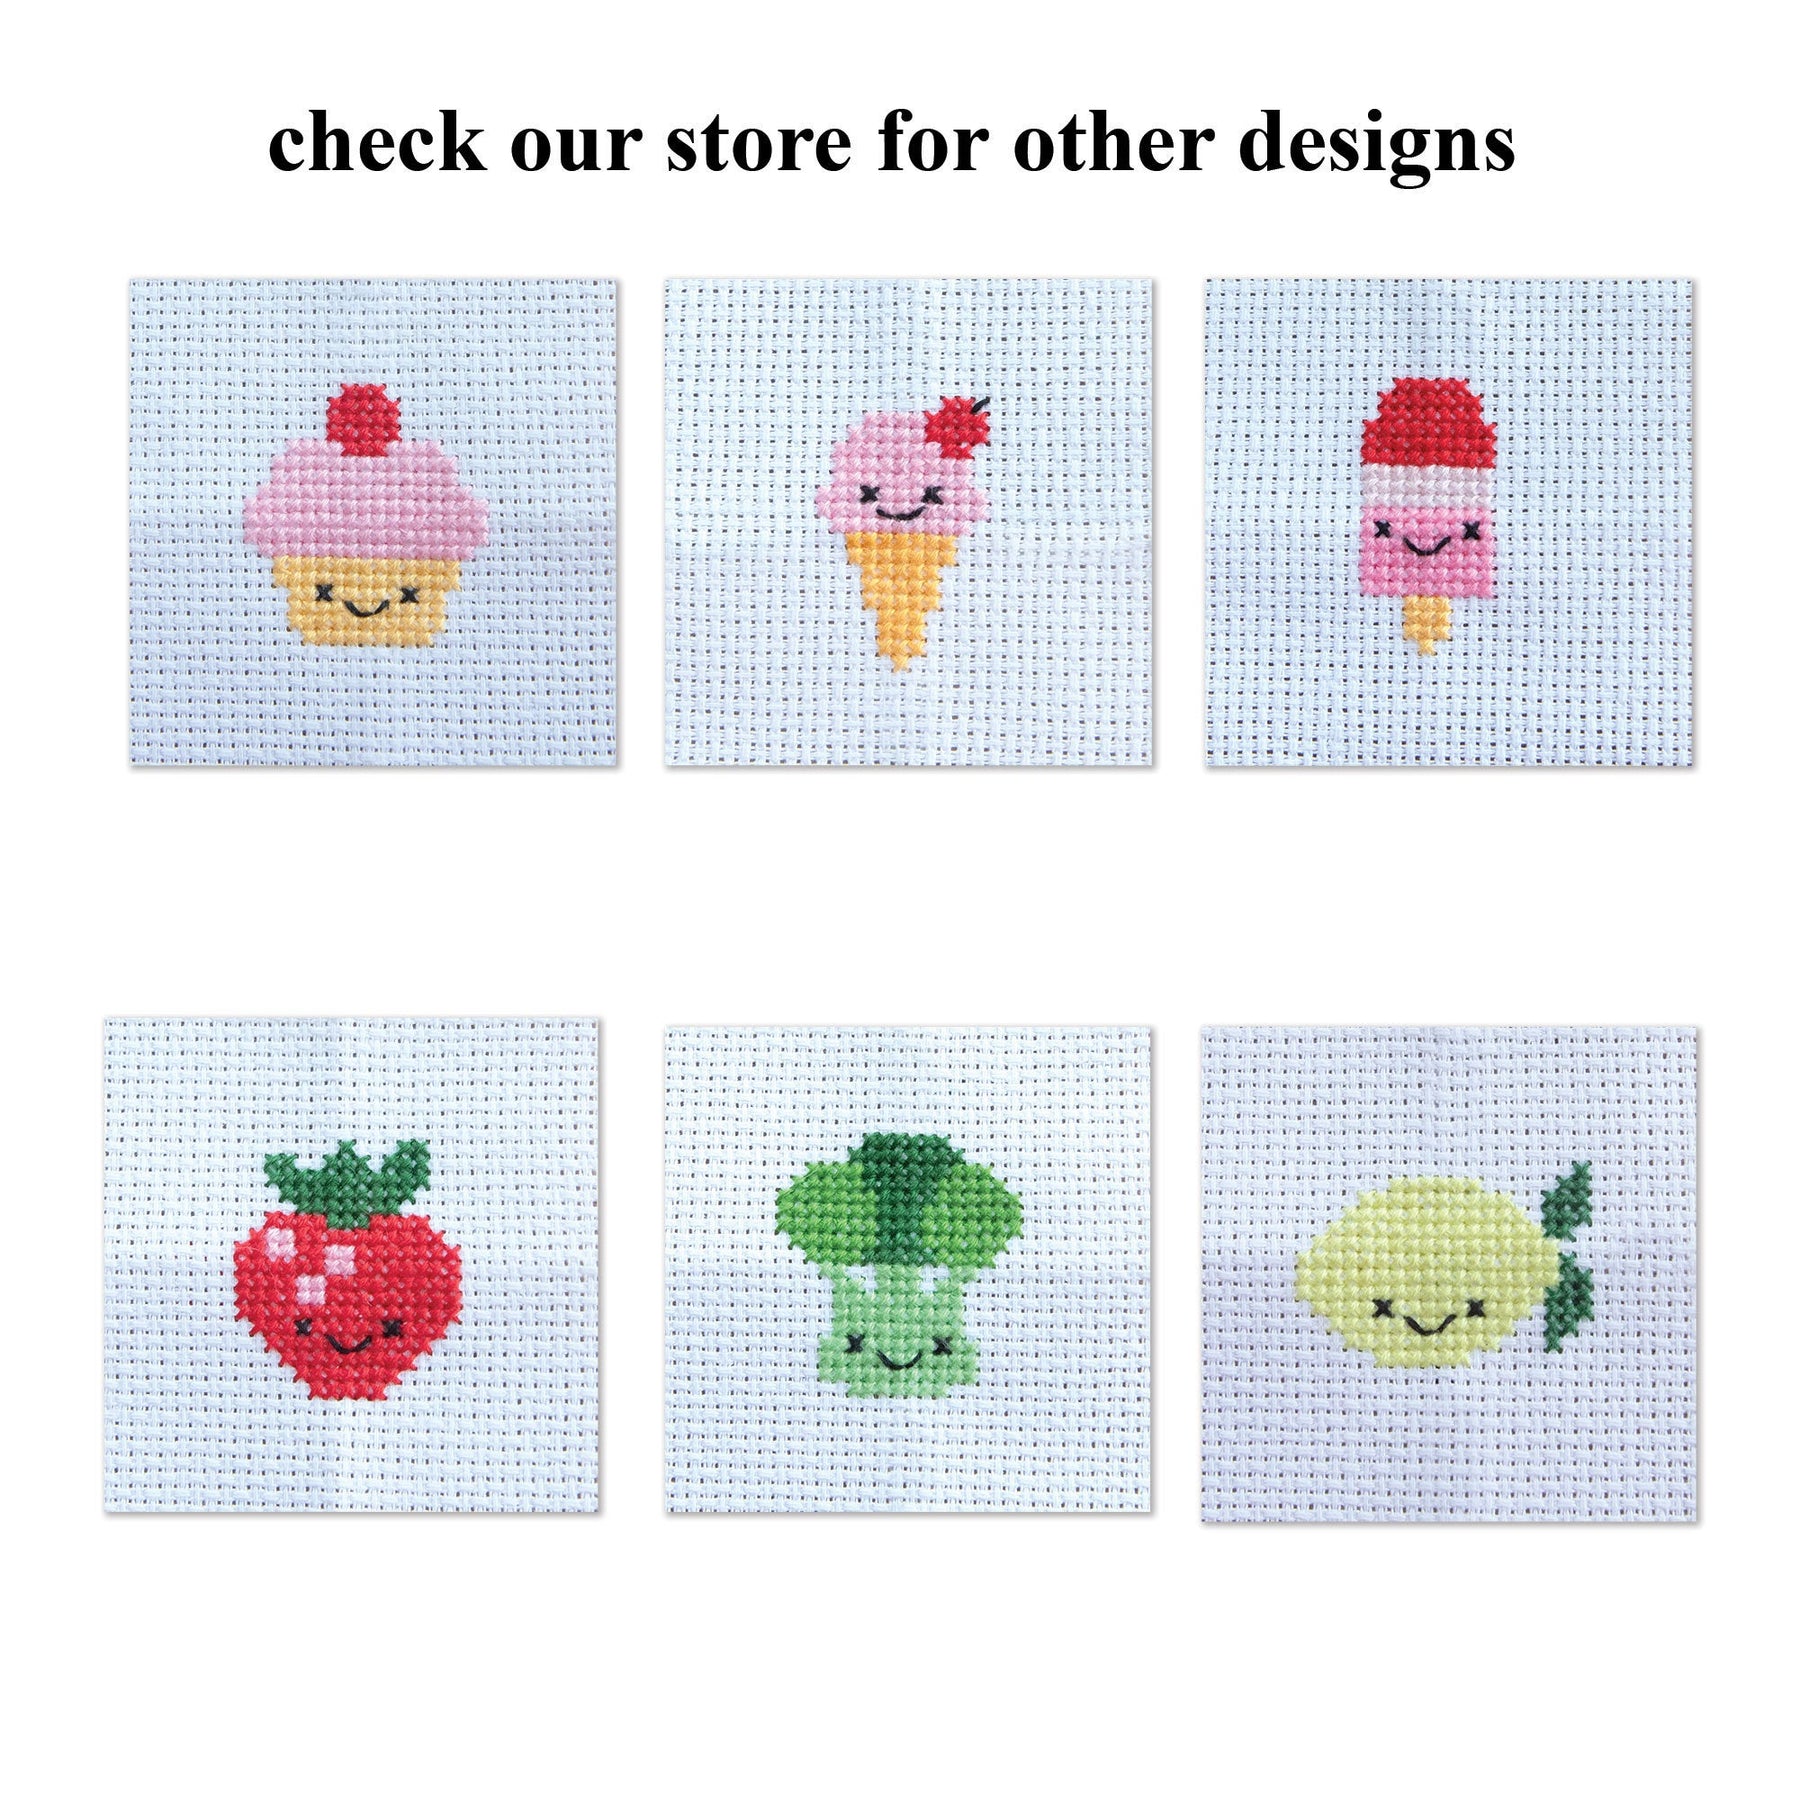 Mini Cross Stitch Kit With Kawaii Ice Cream Design